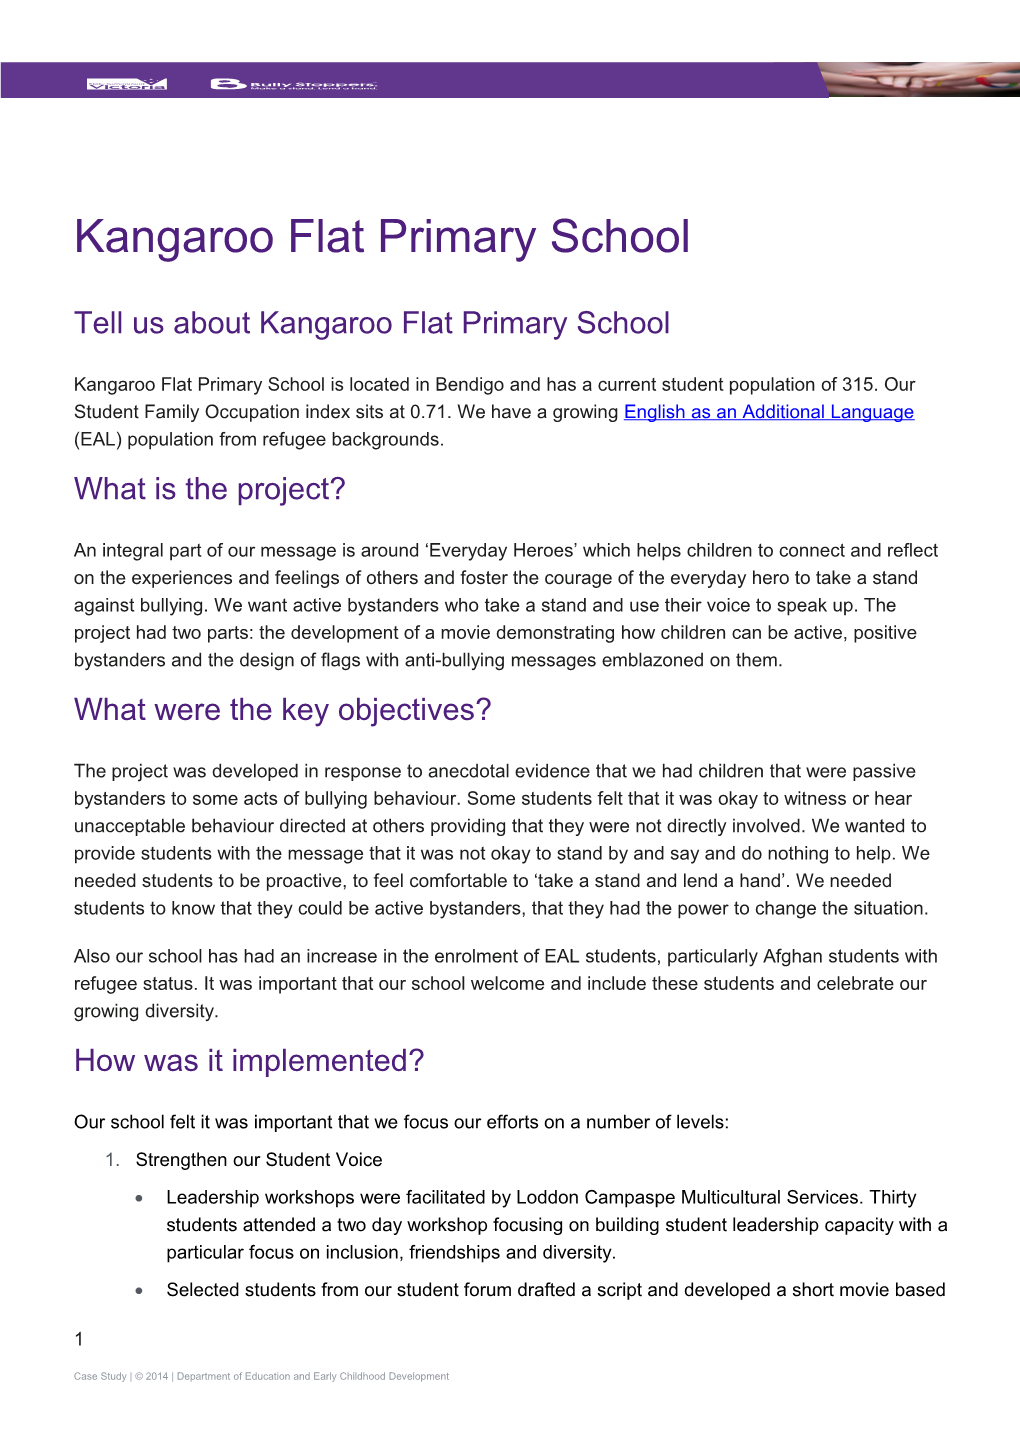 Kangaroo Flat Primary School Case Study